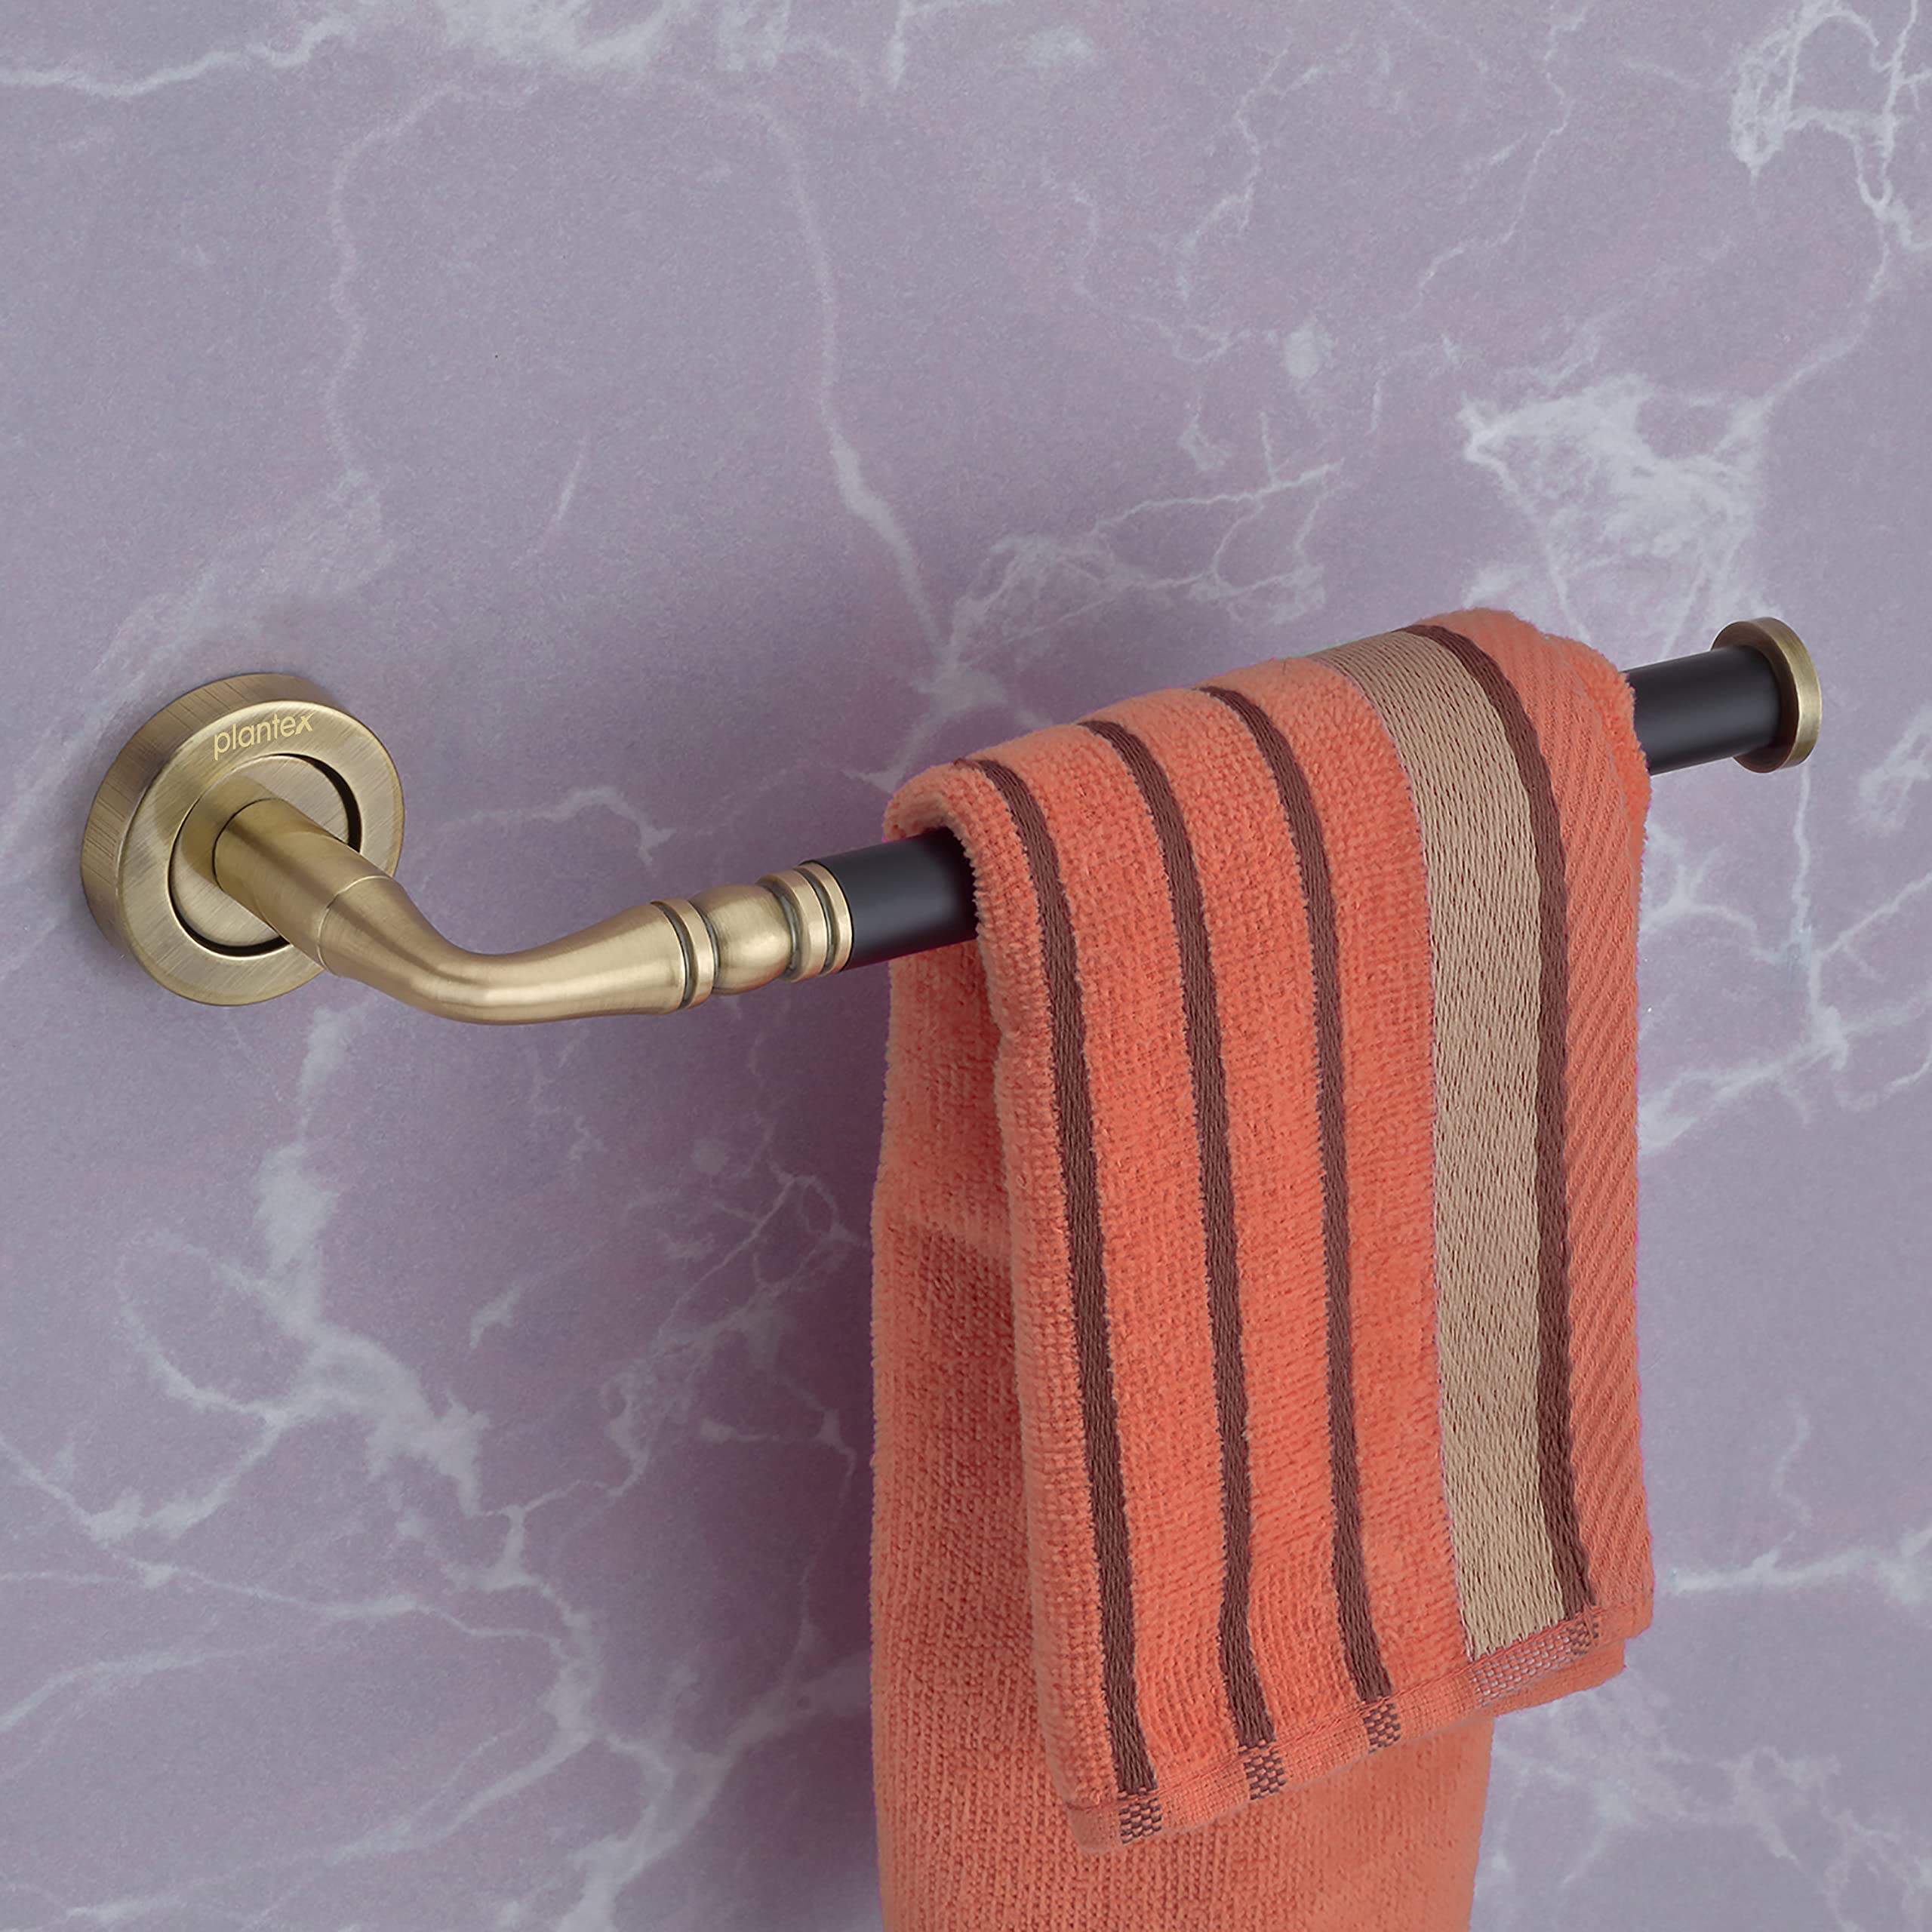 Plantex Stainless Steel Napkin Ring/Towel Ring/Towel Holder/Napkin Hanger for Bathroom/Bathroom Accessories - Pack of 1 (APS-839-Brass Antique & Black)